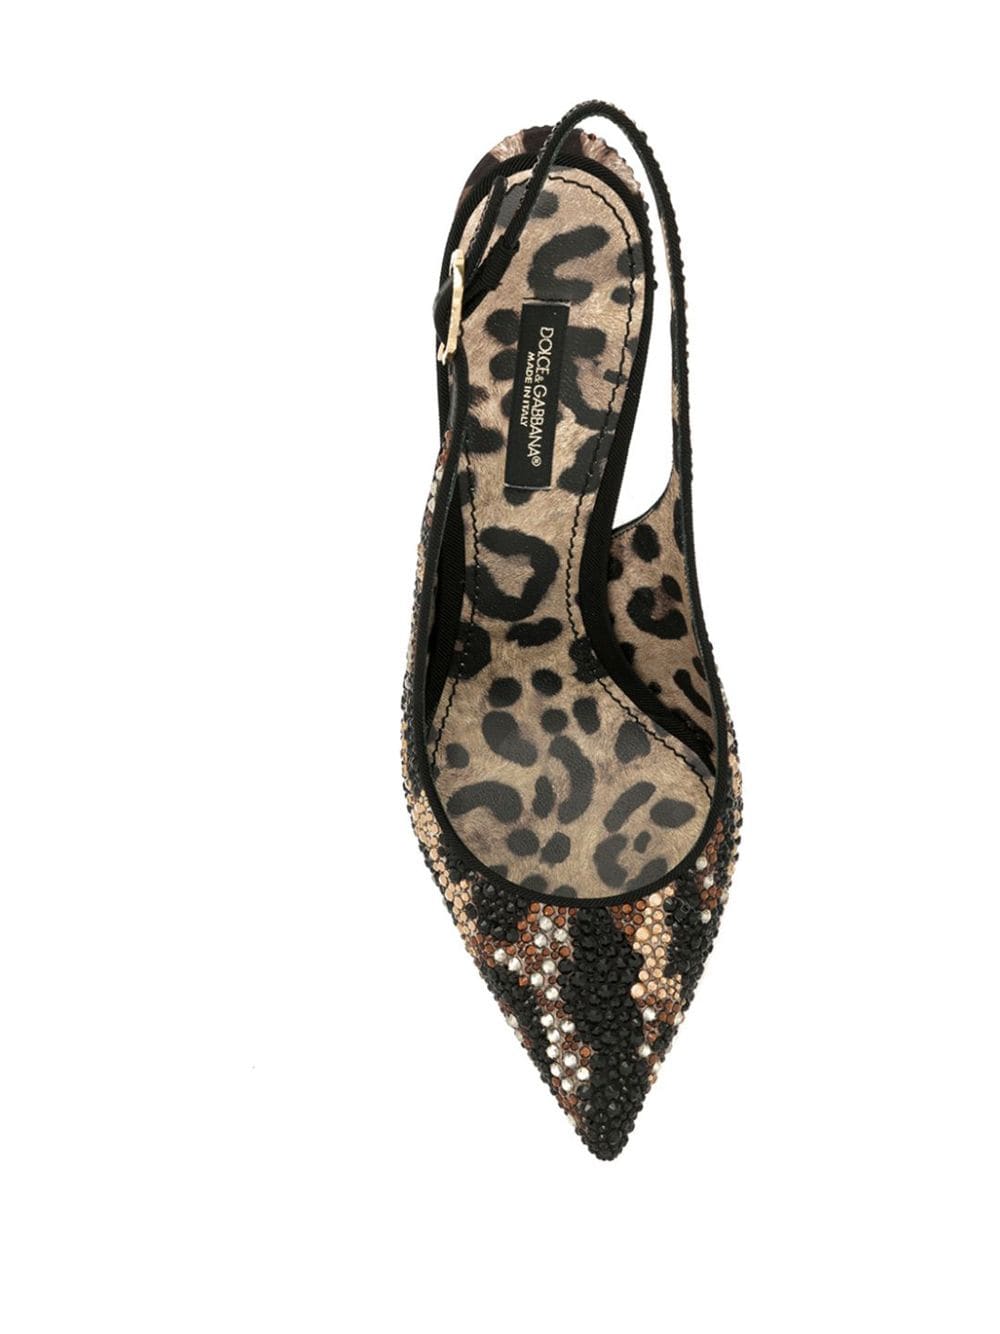 фото Dolce & gabbana леопардовые туфли с ремешком на пятке